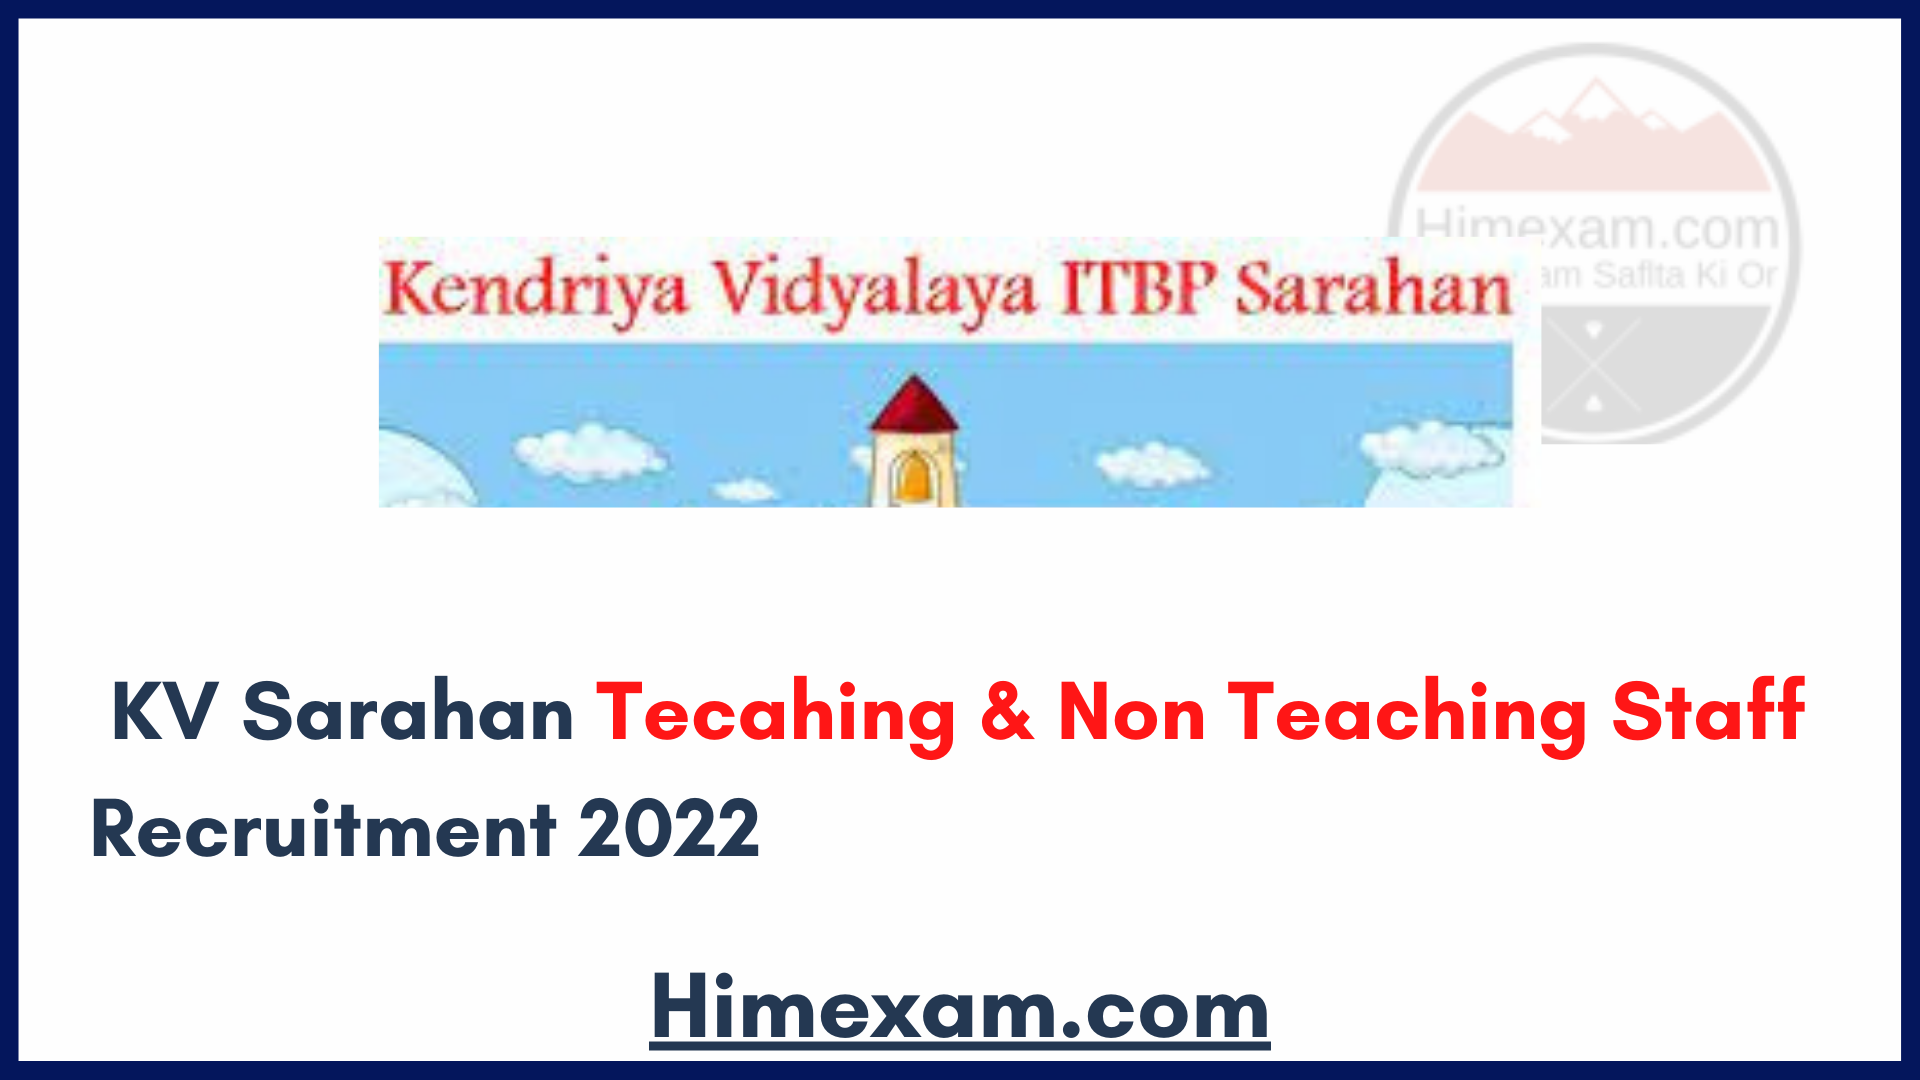 KV Sarahan Tecahing & Non Teaching Staff Recruitment 2022